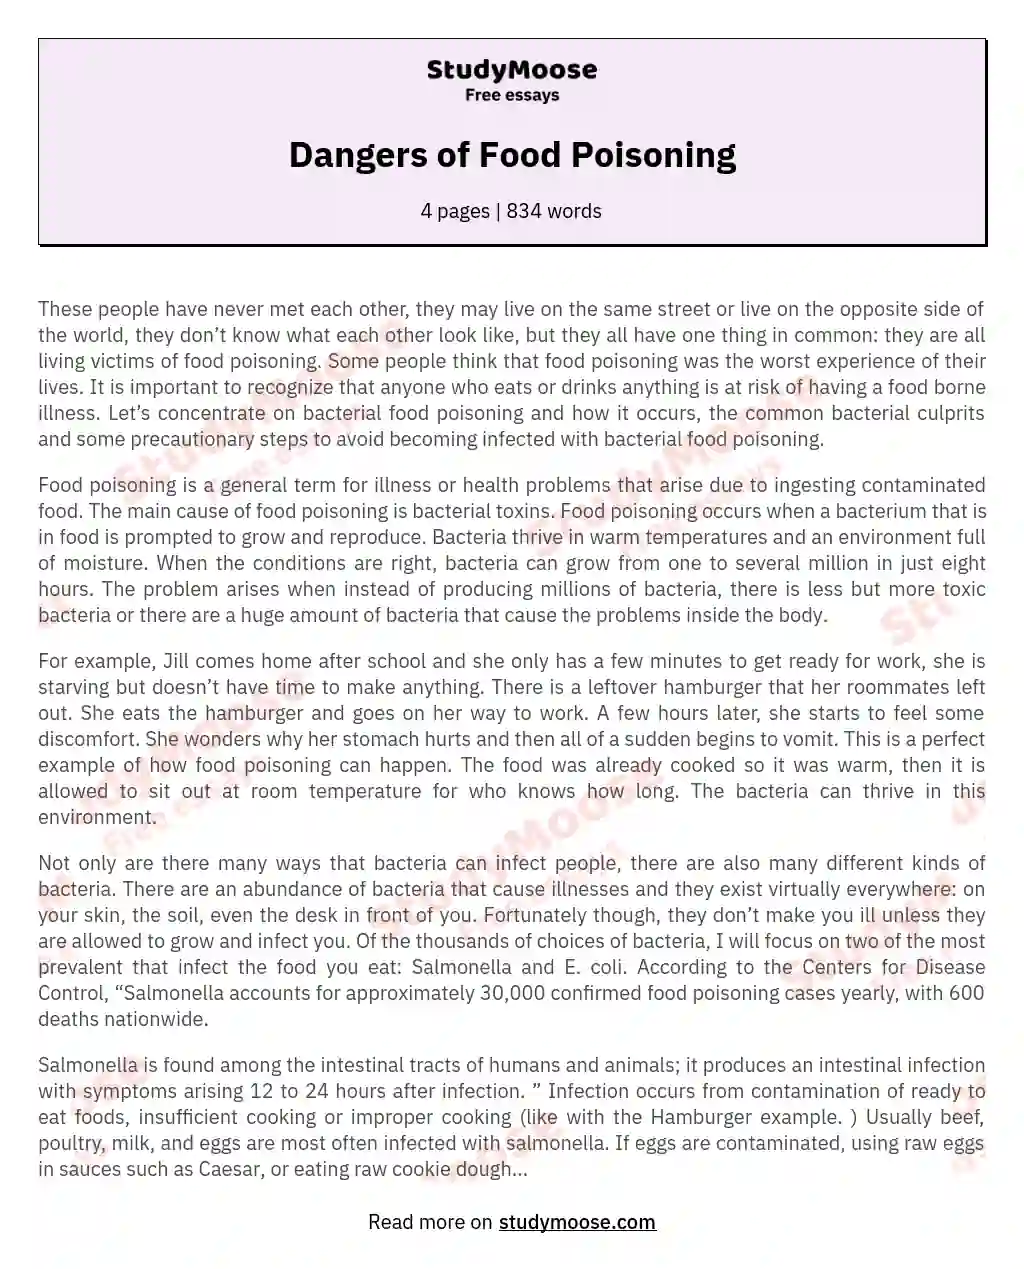 Dangers of Food Poisoning essay